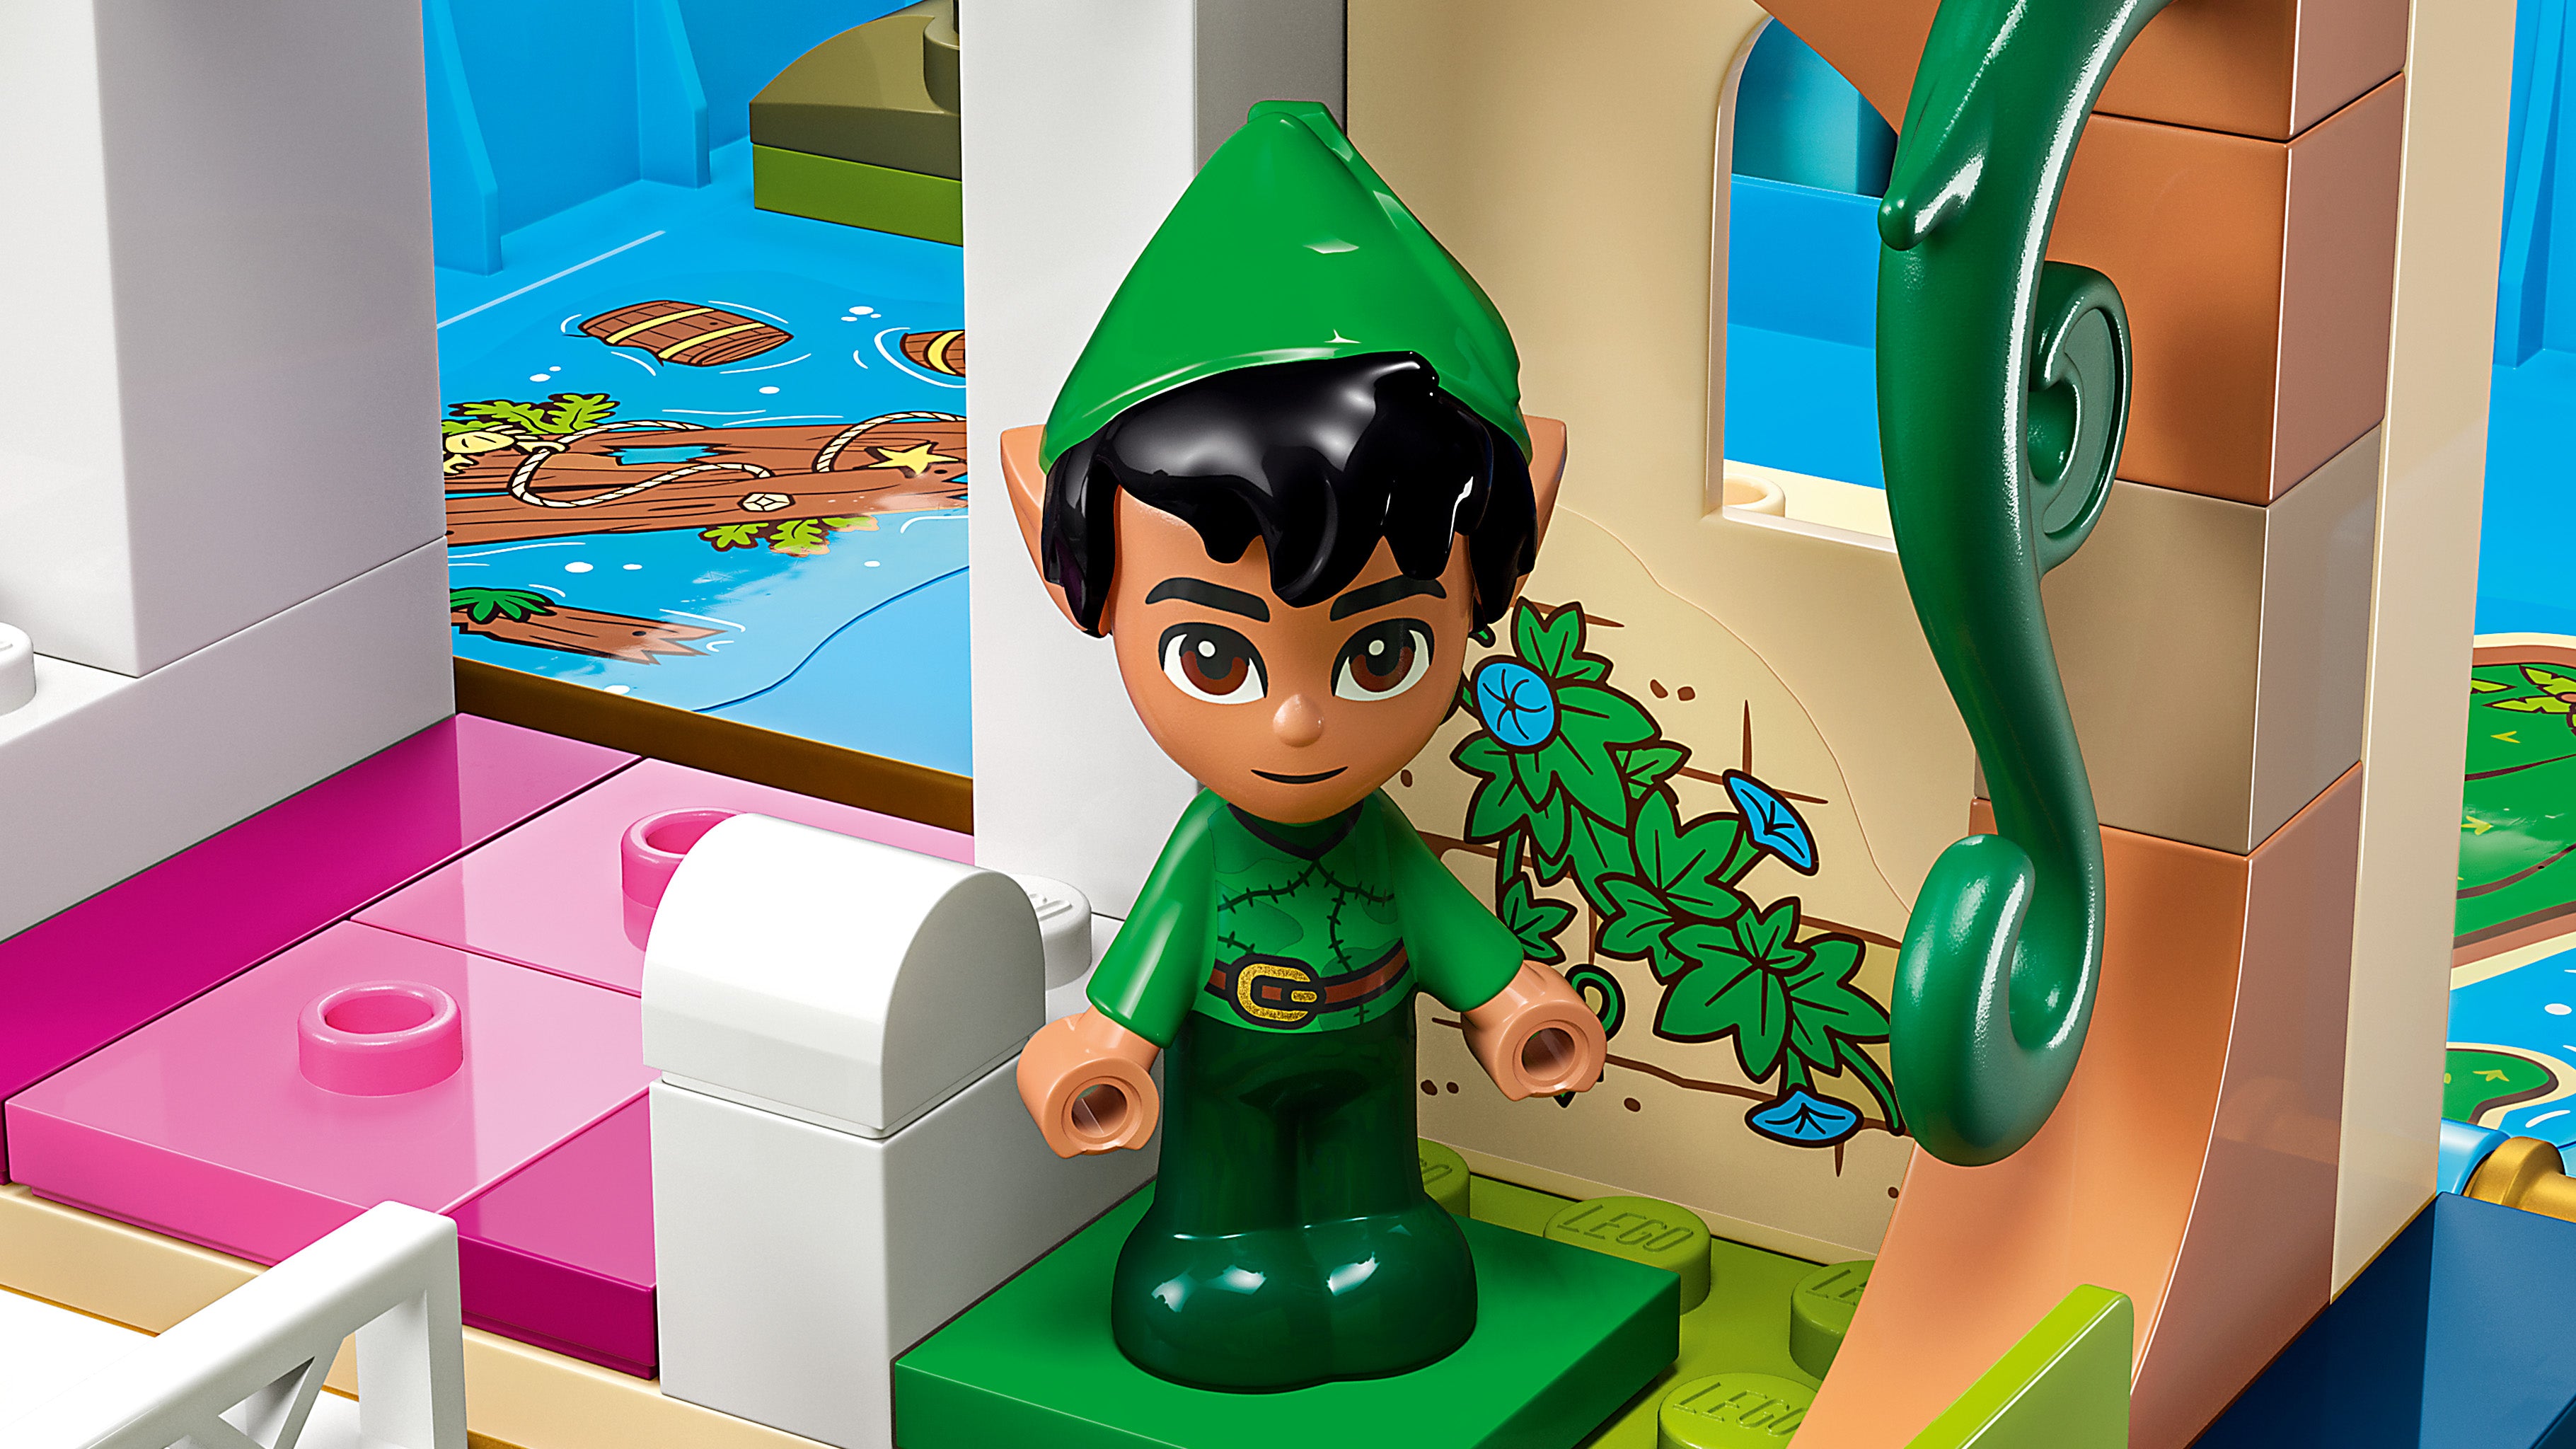 Lego 43220 Peter Pan & Wendys Story